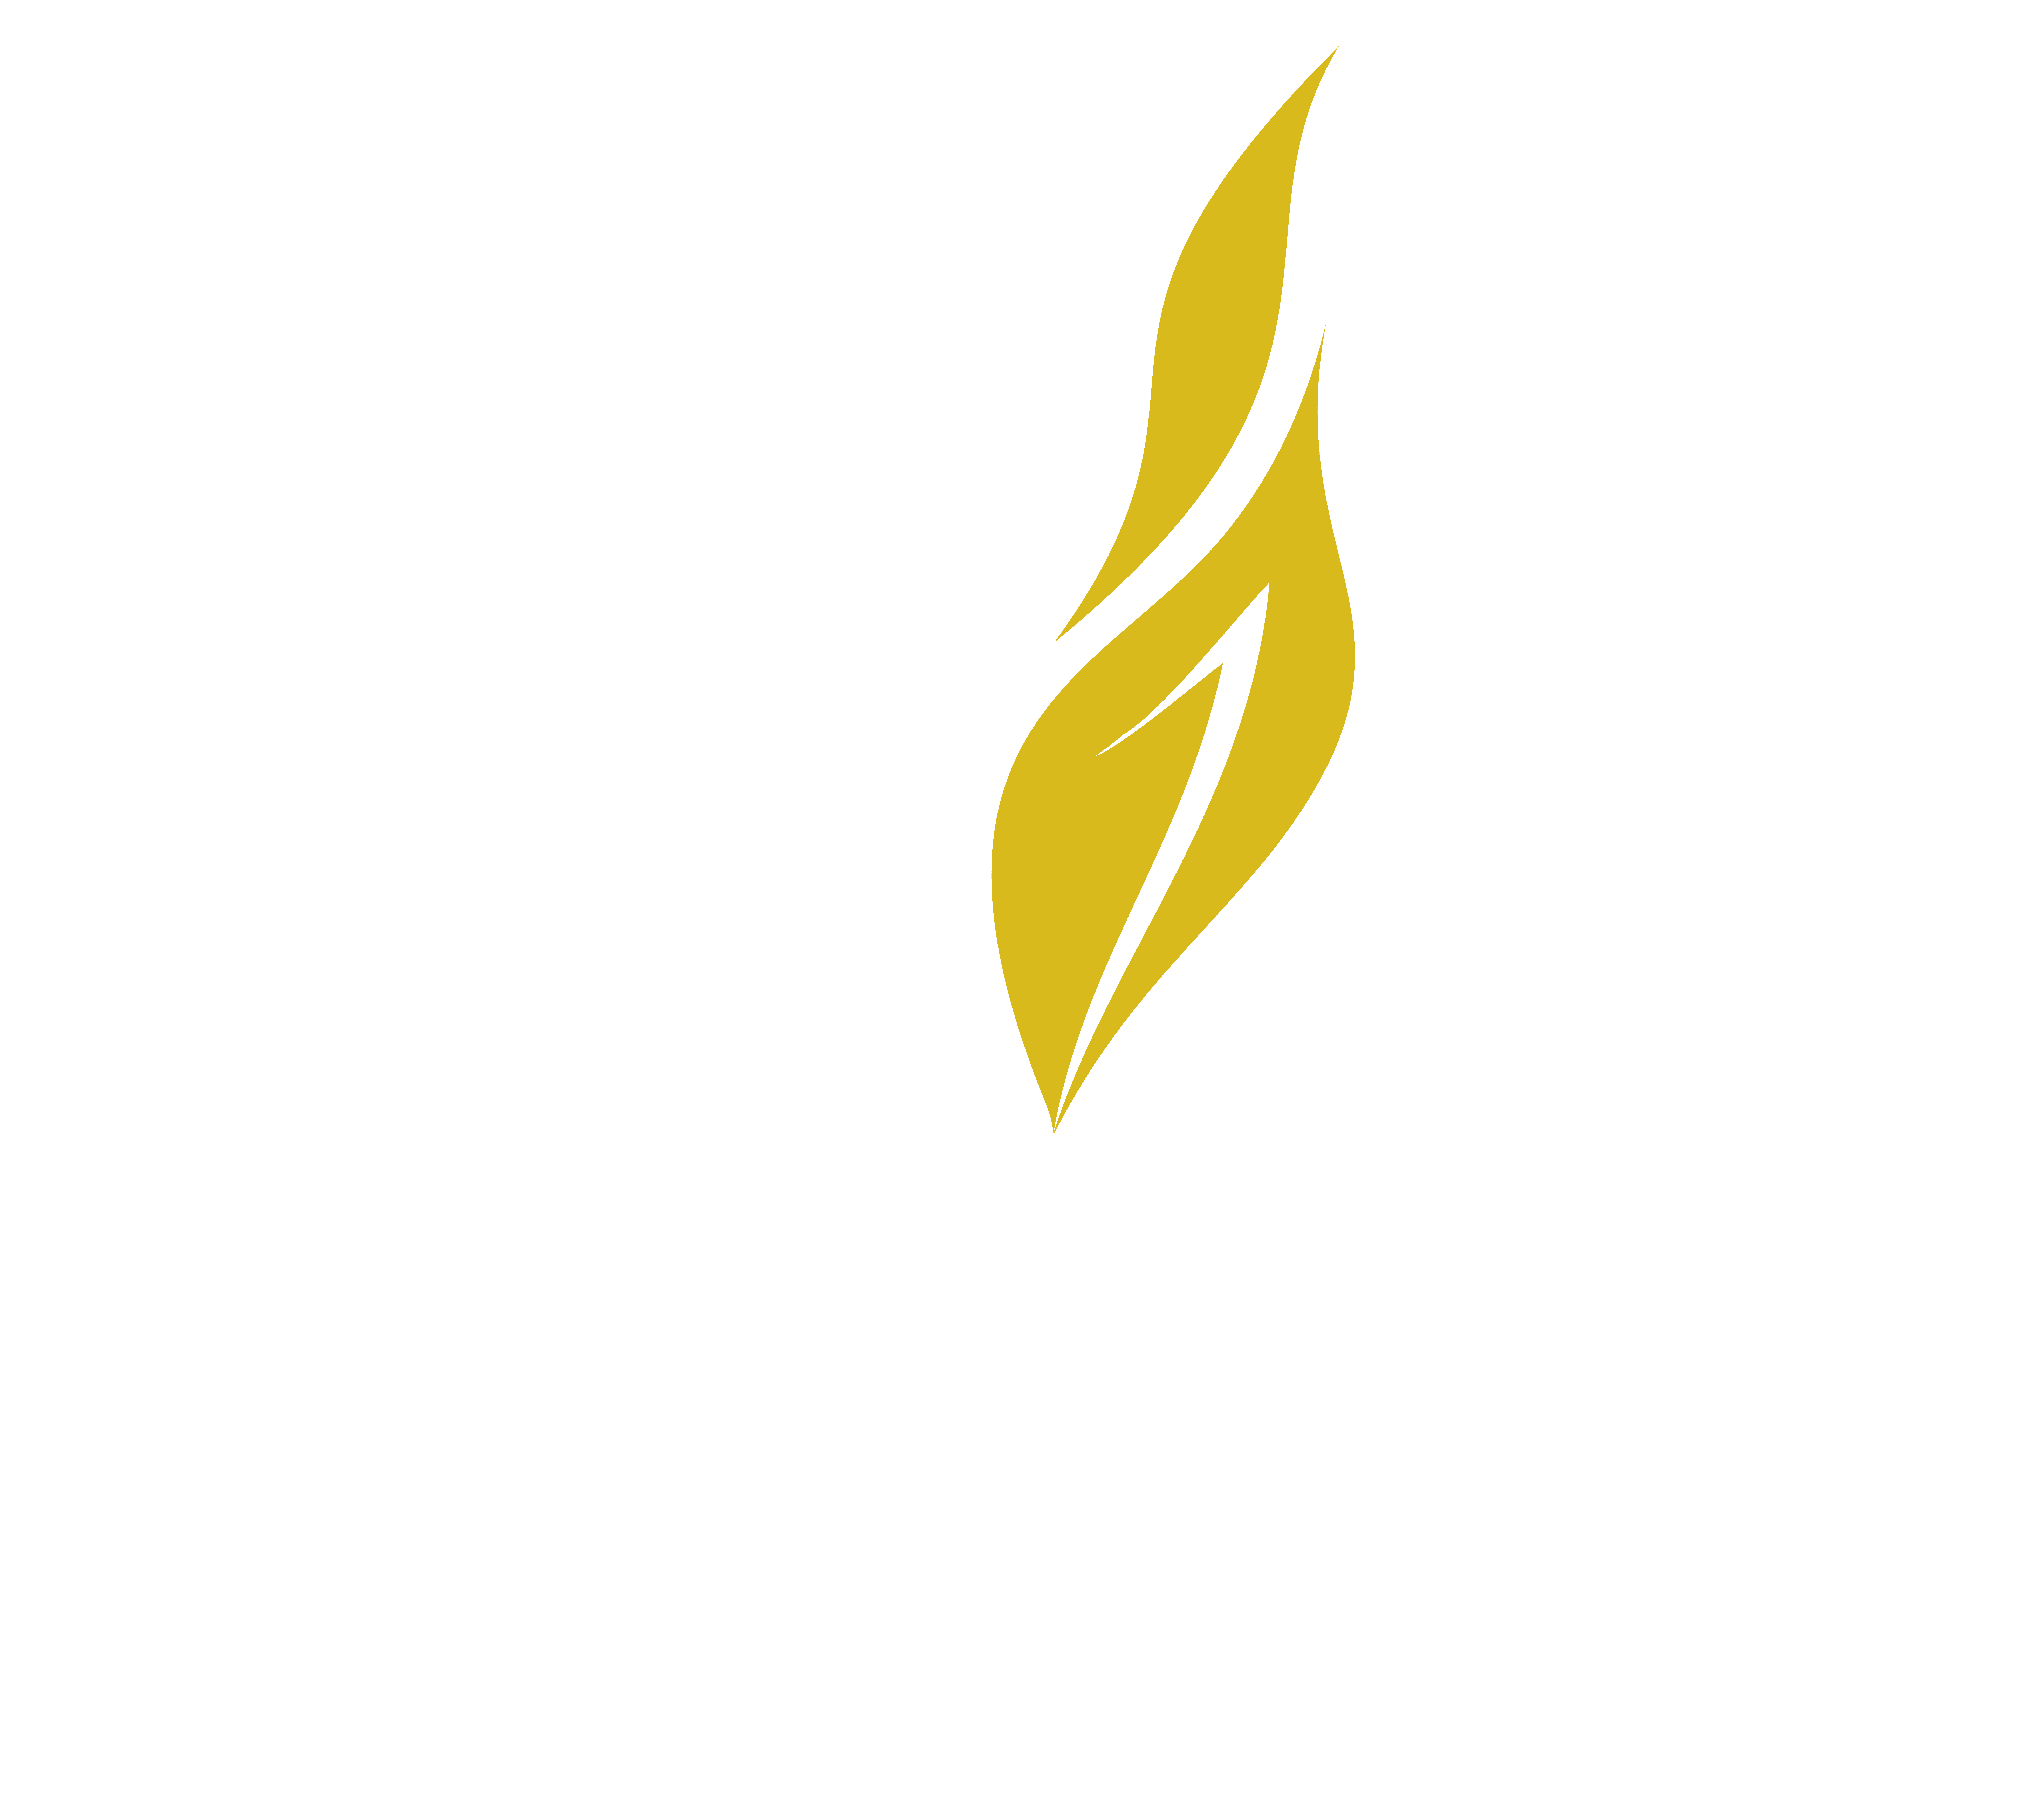 IGLESIA PENTECOSTAL UNIDA EN EUROPA